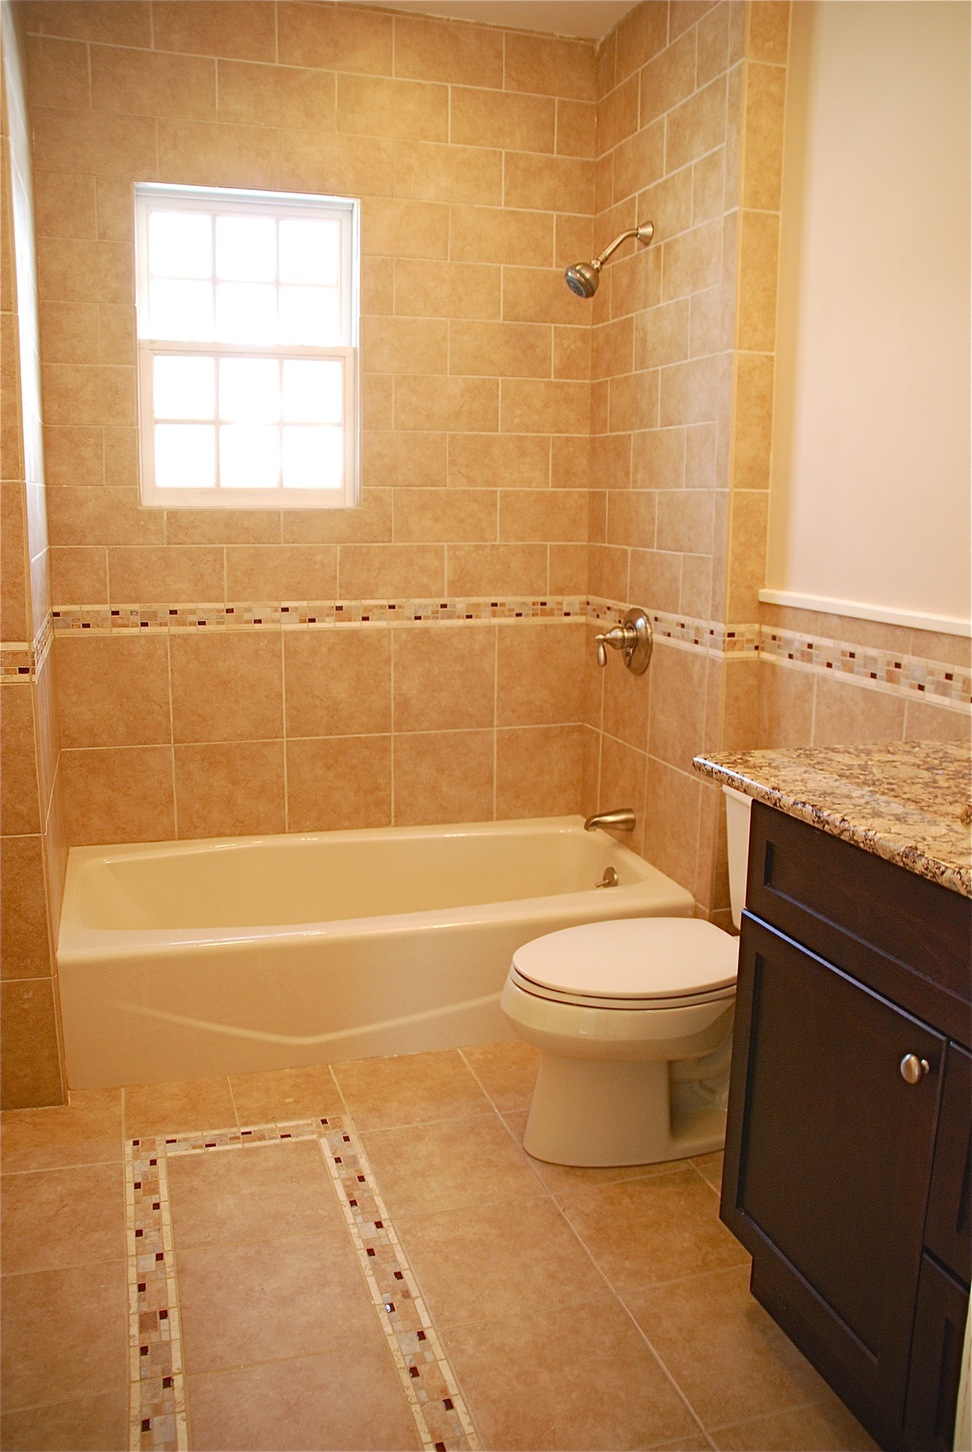 bathroom designs and tiles mallow photo - 3